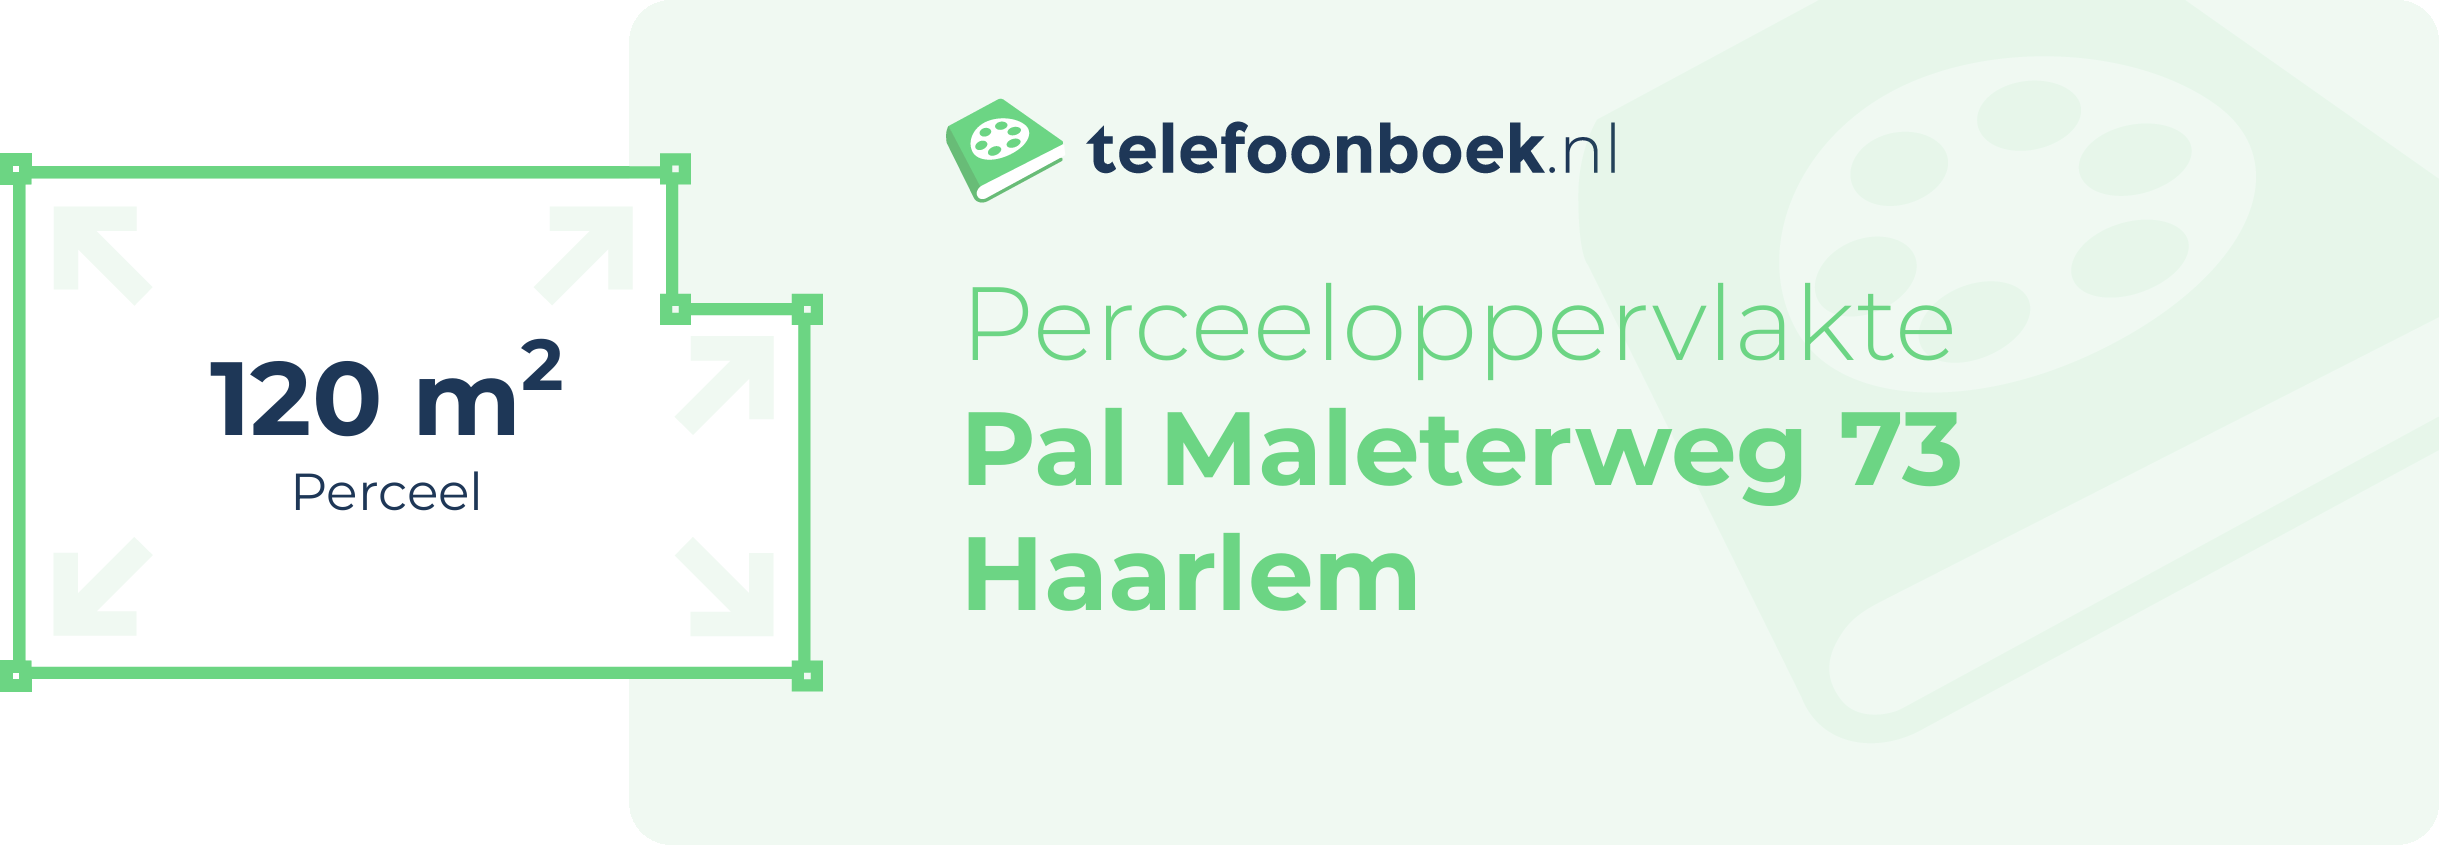 Perceeloppervlakte Pal Maleterweg 73 Haarlem